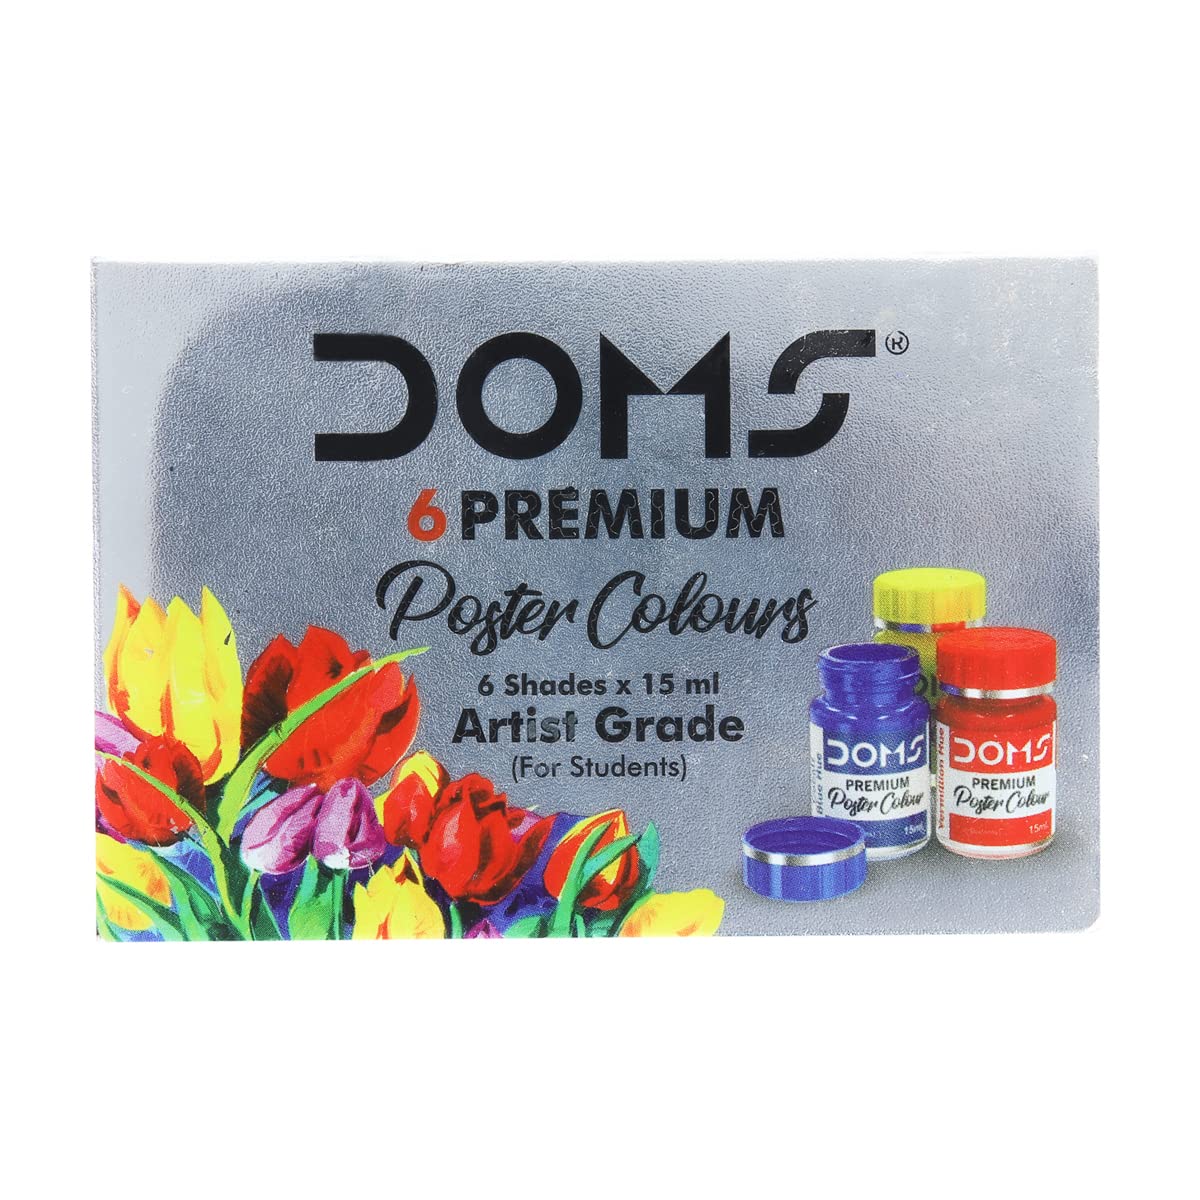 Doms Premium Poster Colours 6 Shades 15 Ml With 1 Agitator